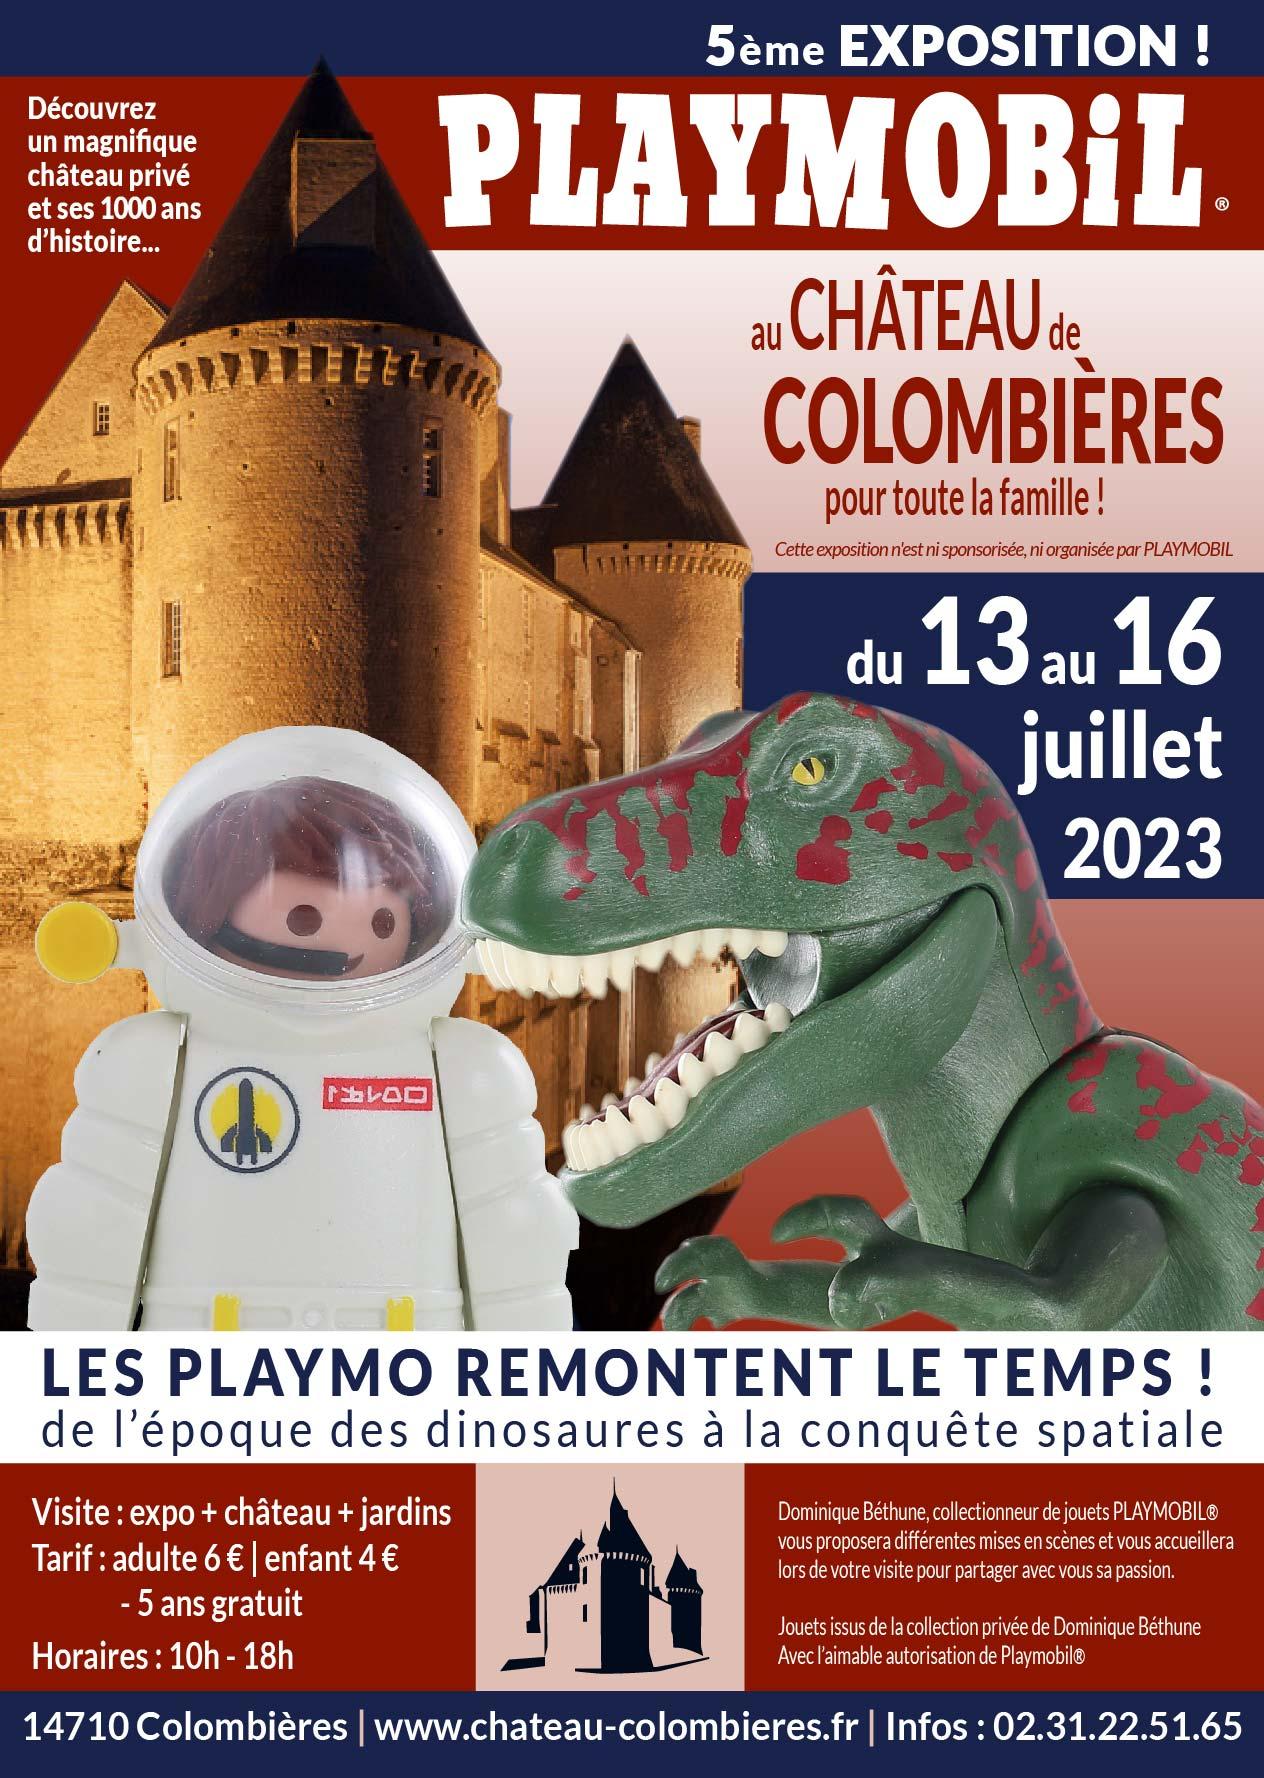 Exposition playmobil normandie 2023 colombieres dominique bethune web 3